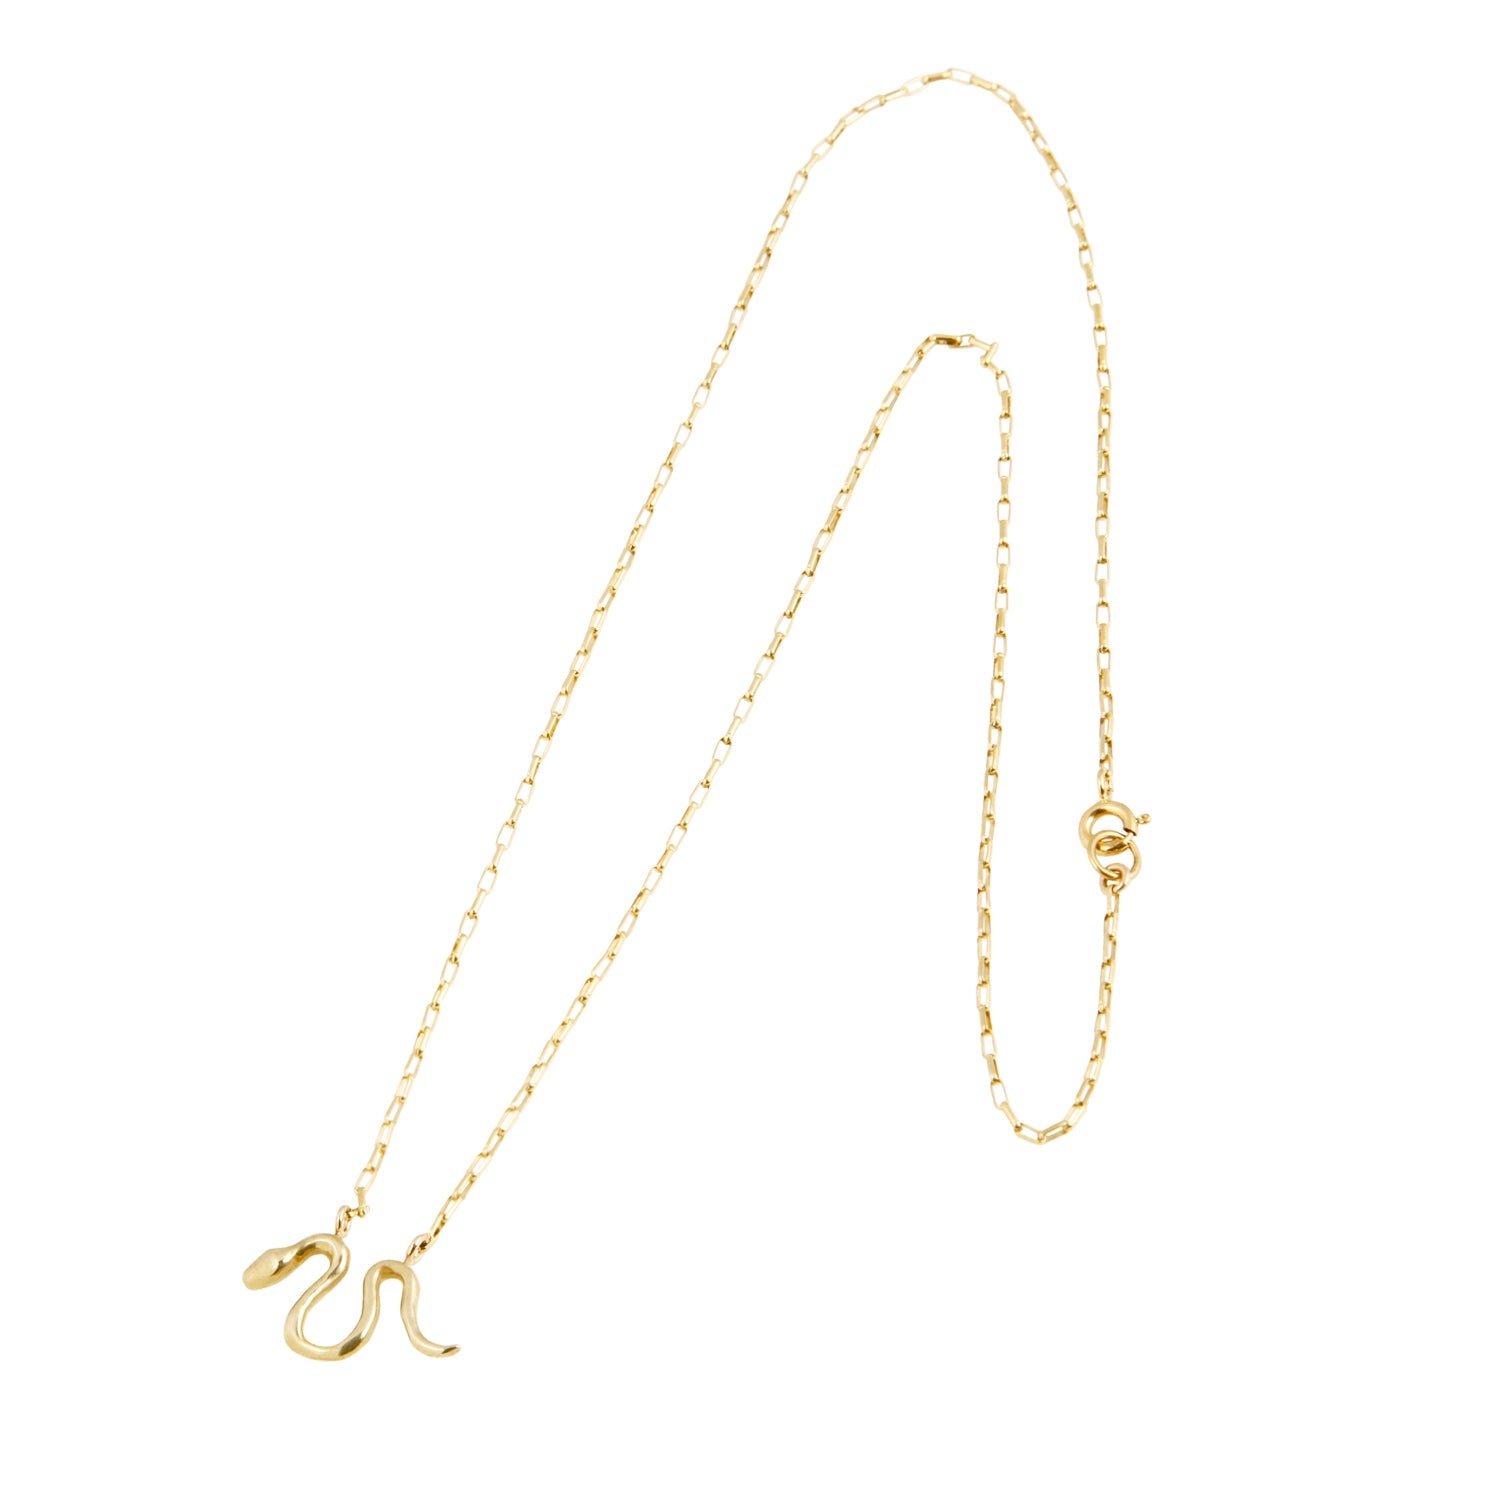 LITTLE SNAKE necklace | Marisa Mason Jewelry